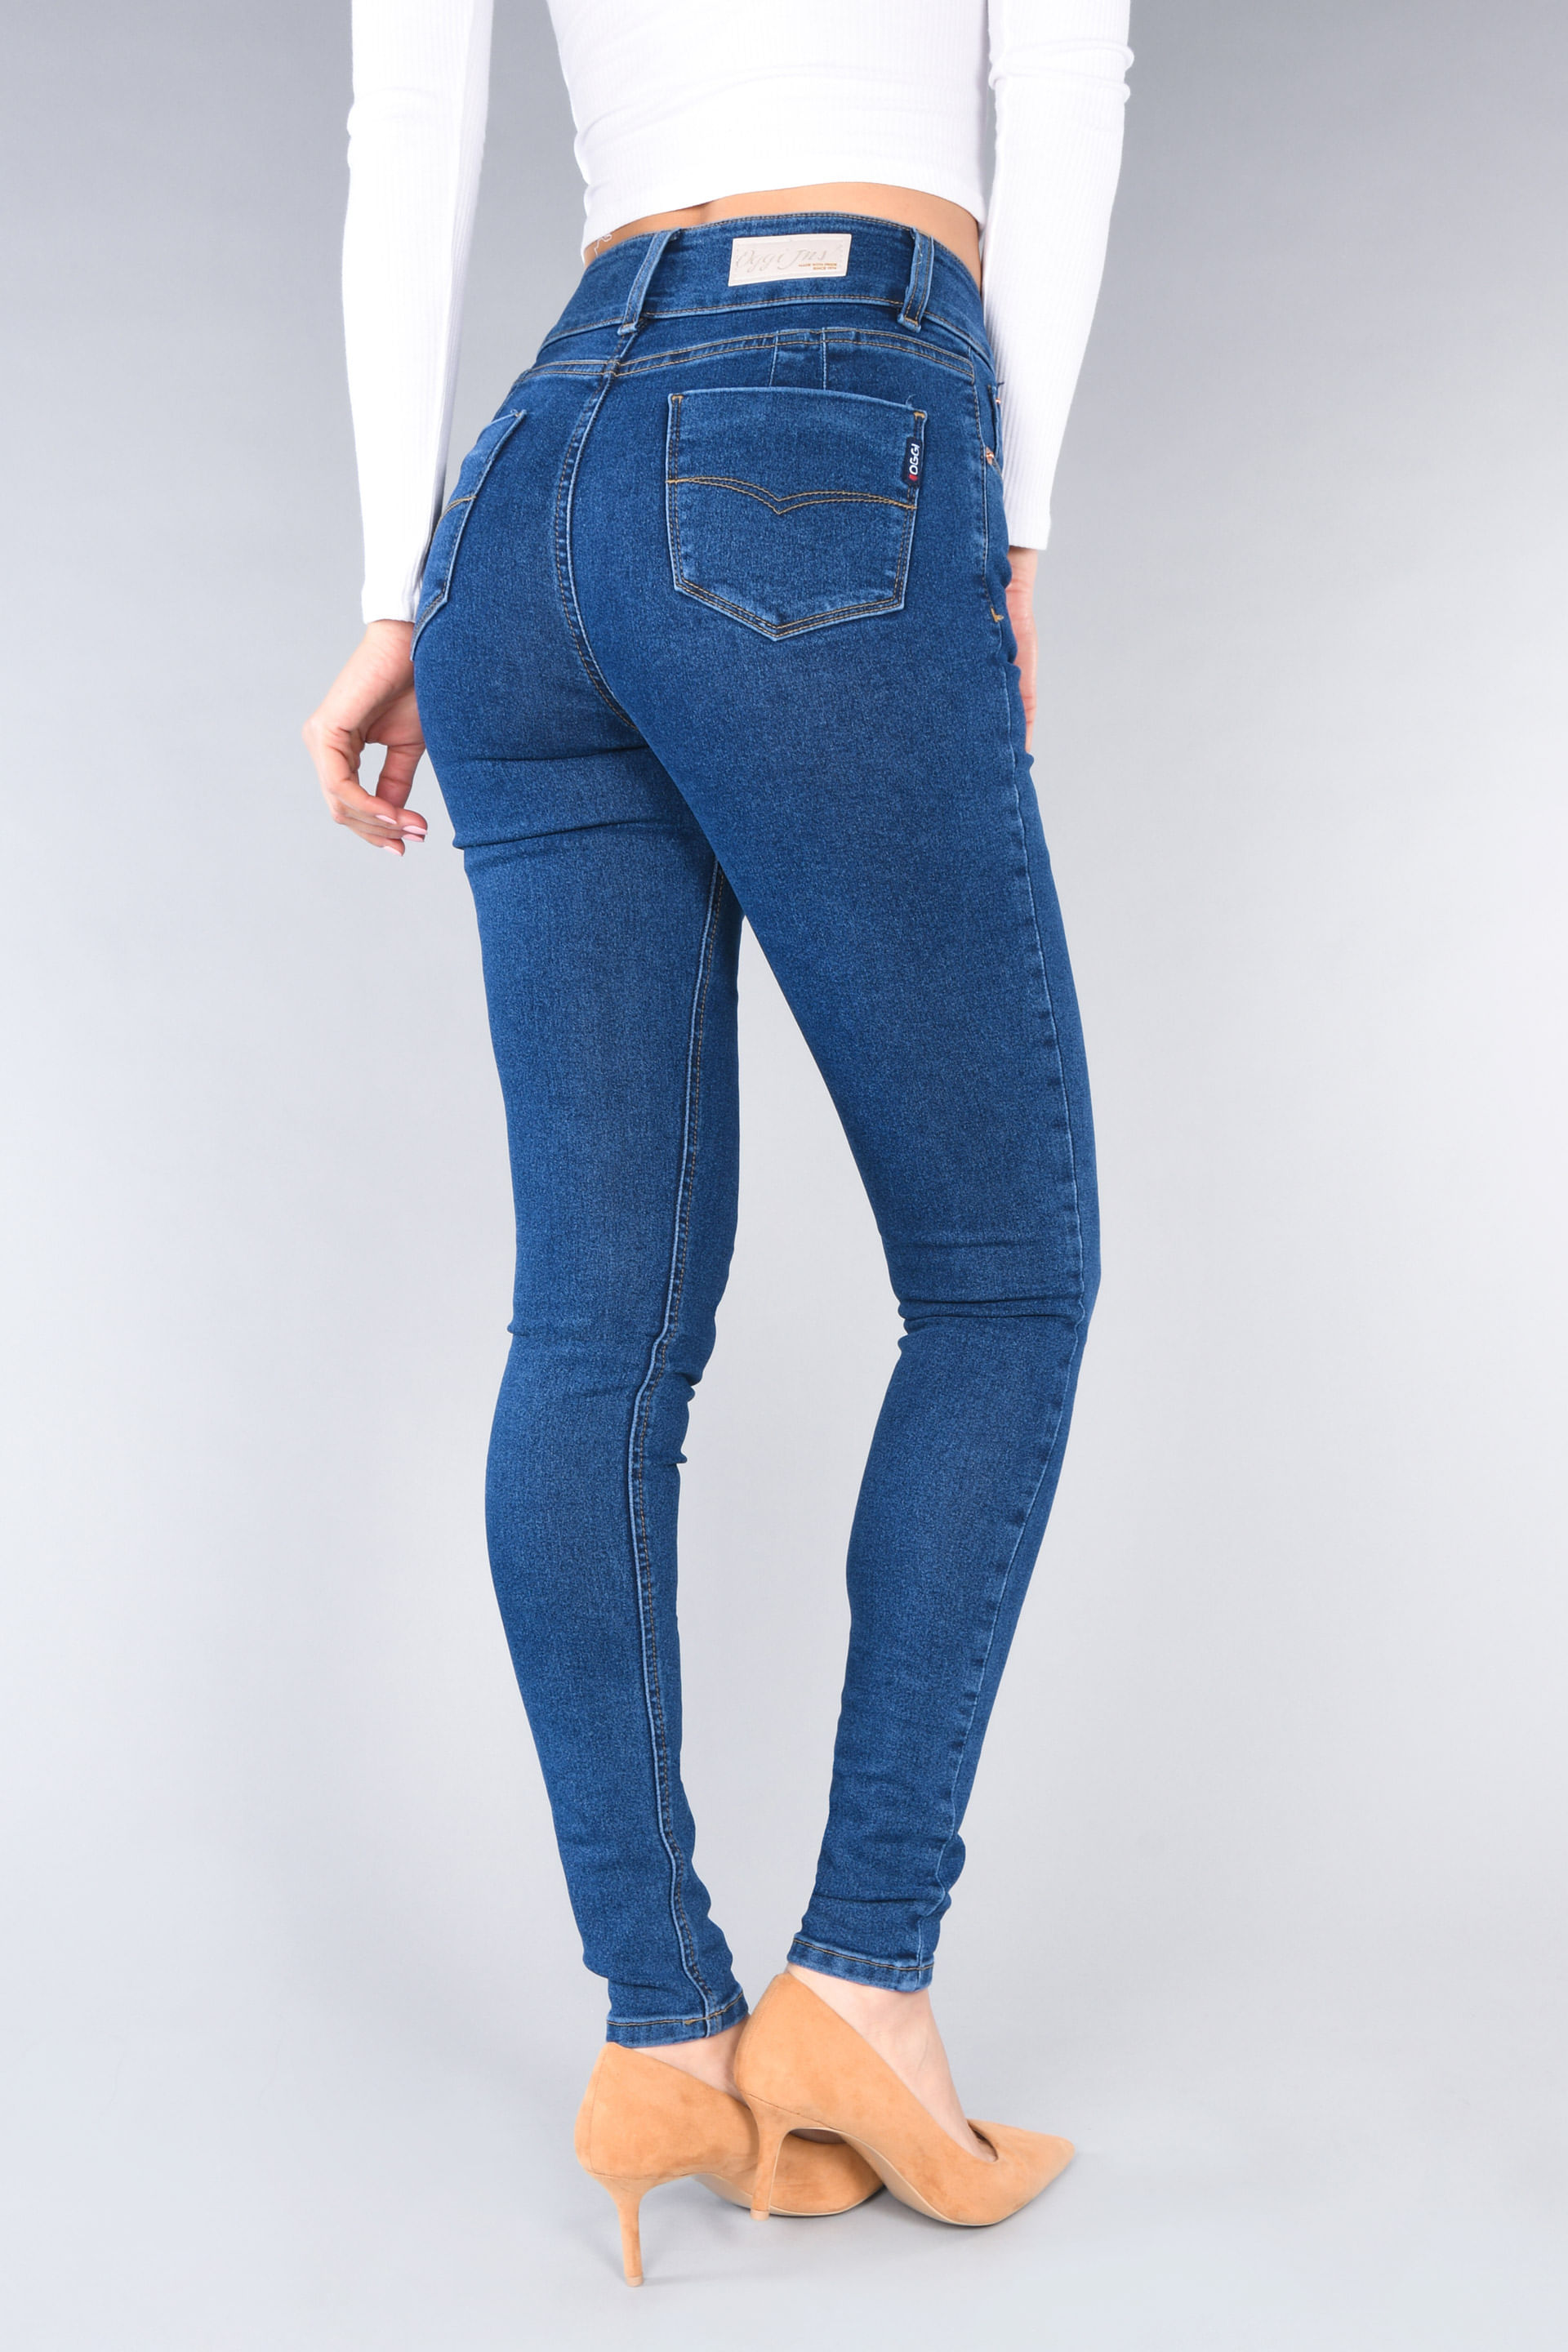 Jeans Súper Skinny Oggi - Katia para Mujer Mezclilla Azul Medio